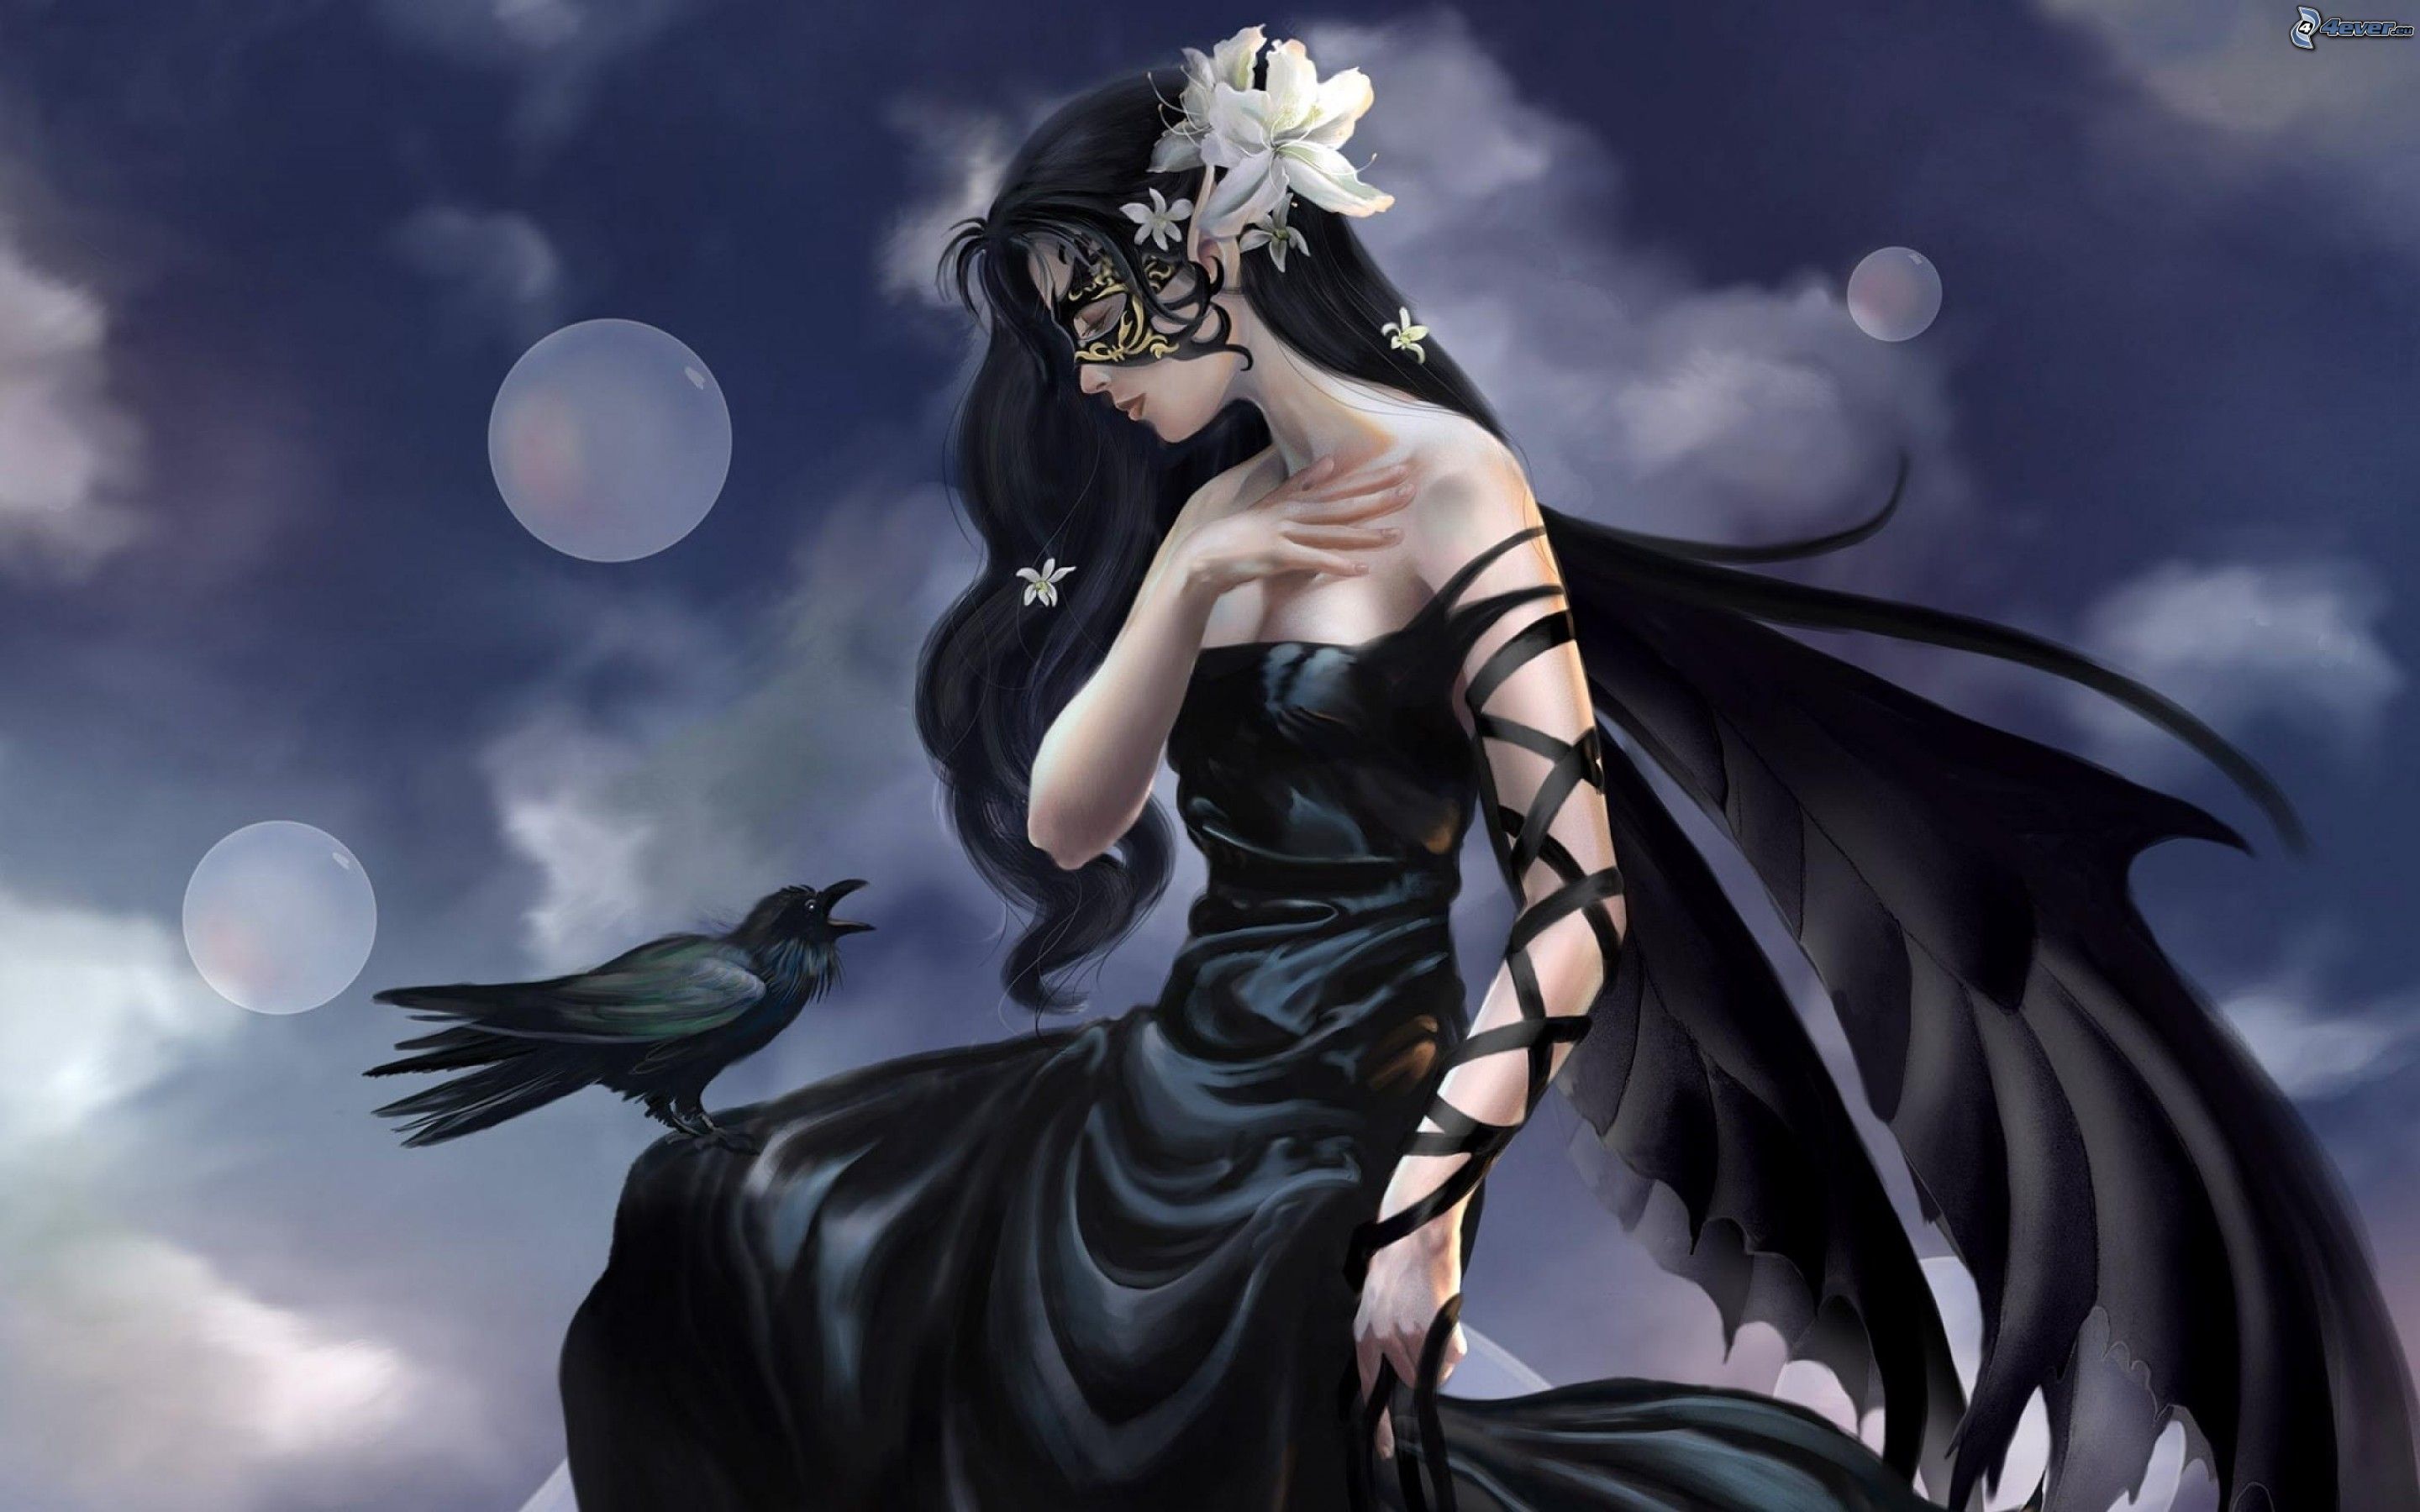 Ligeia a gothic romance